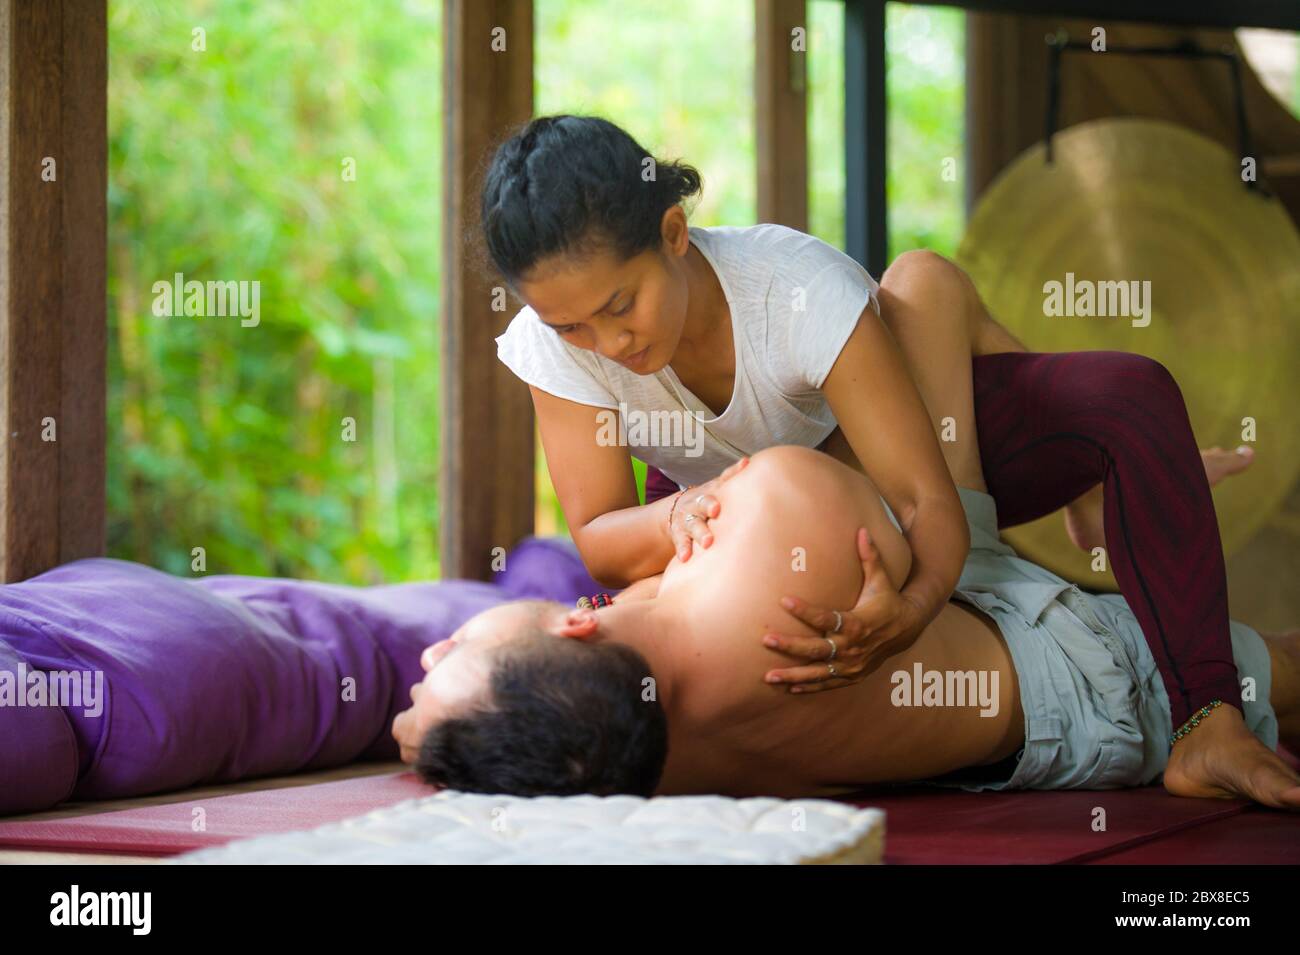 asian girl gives massage